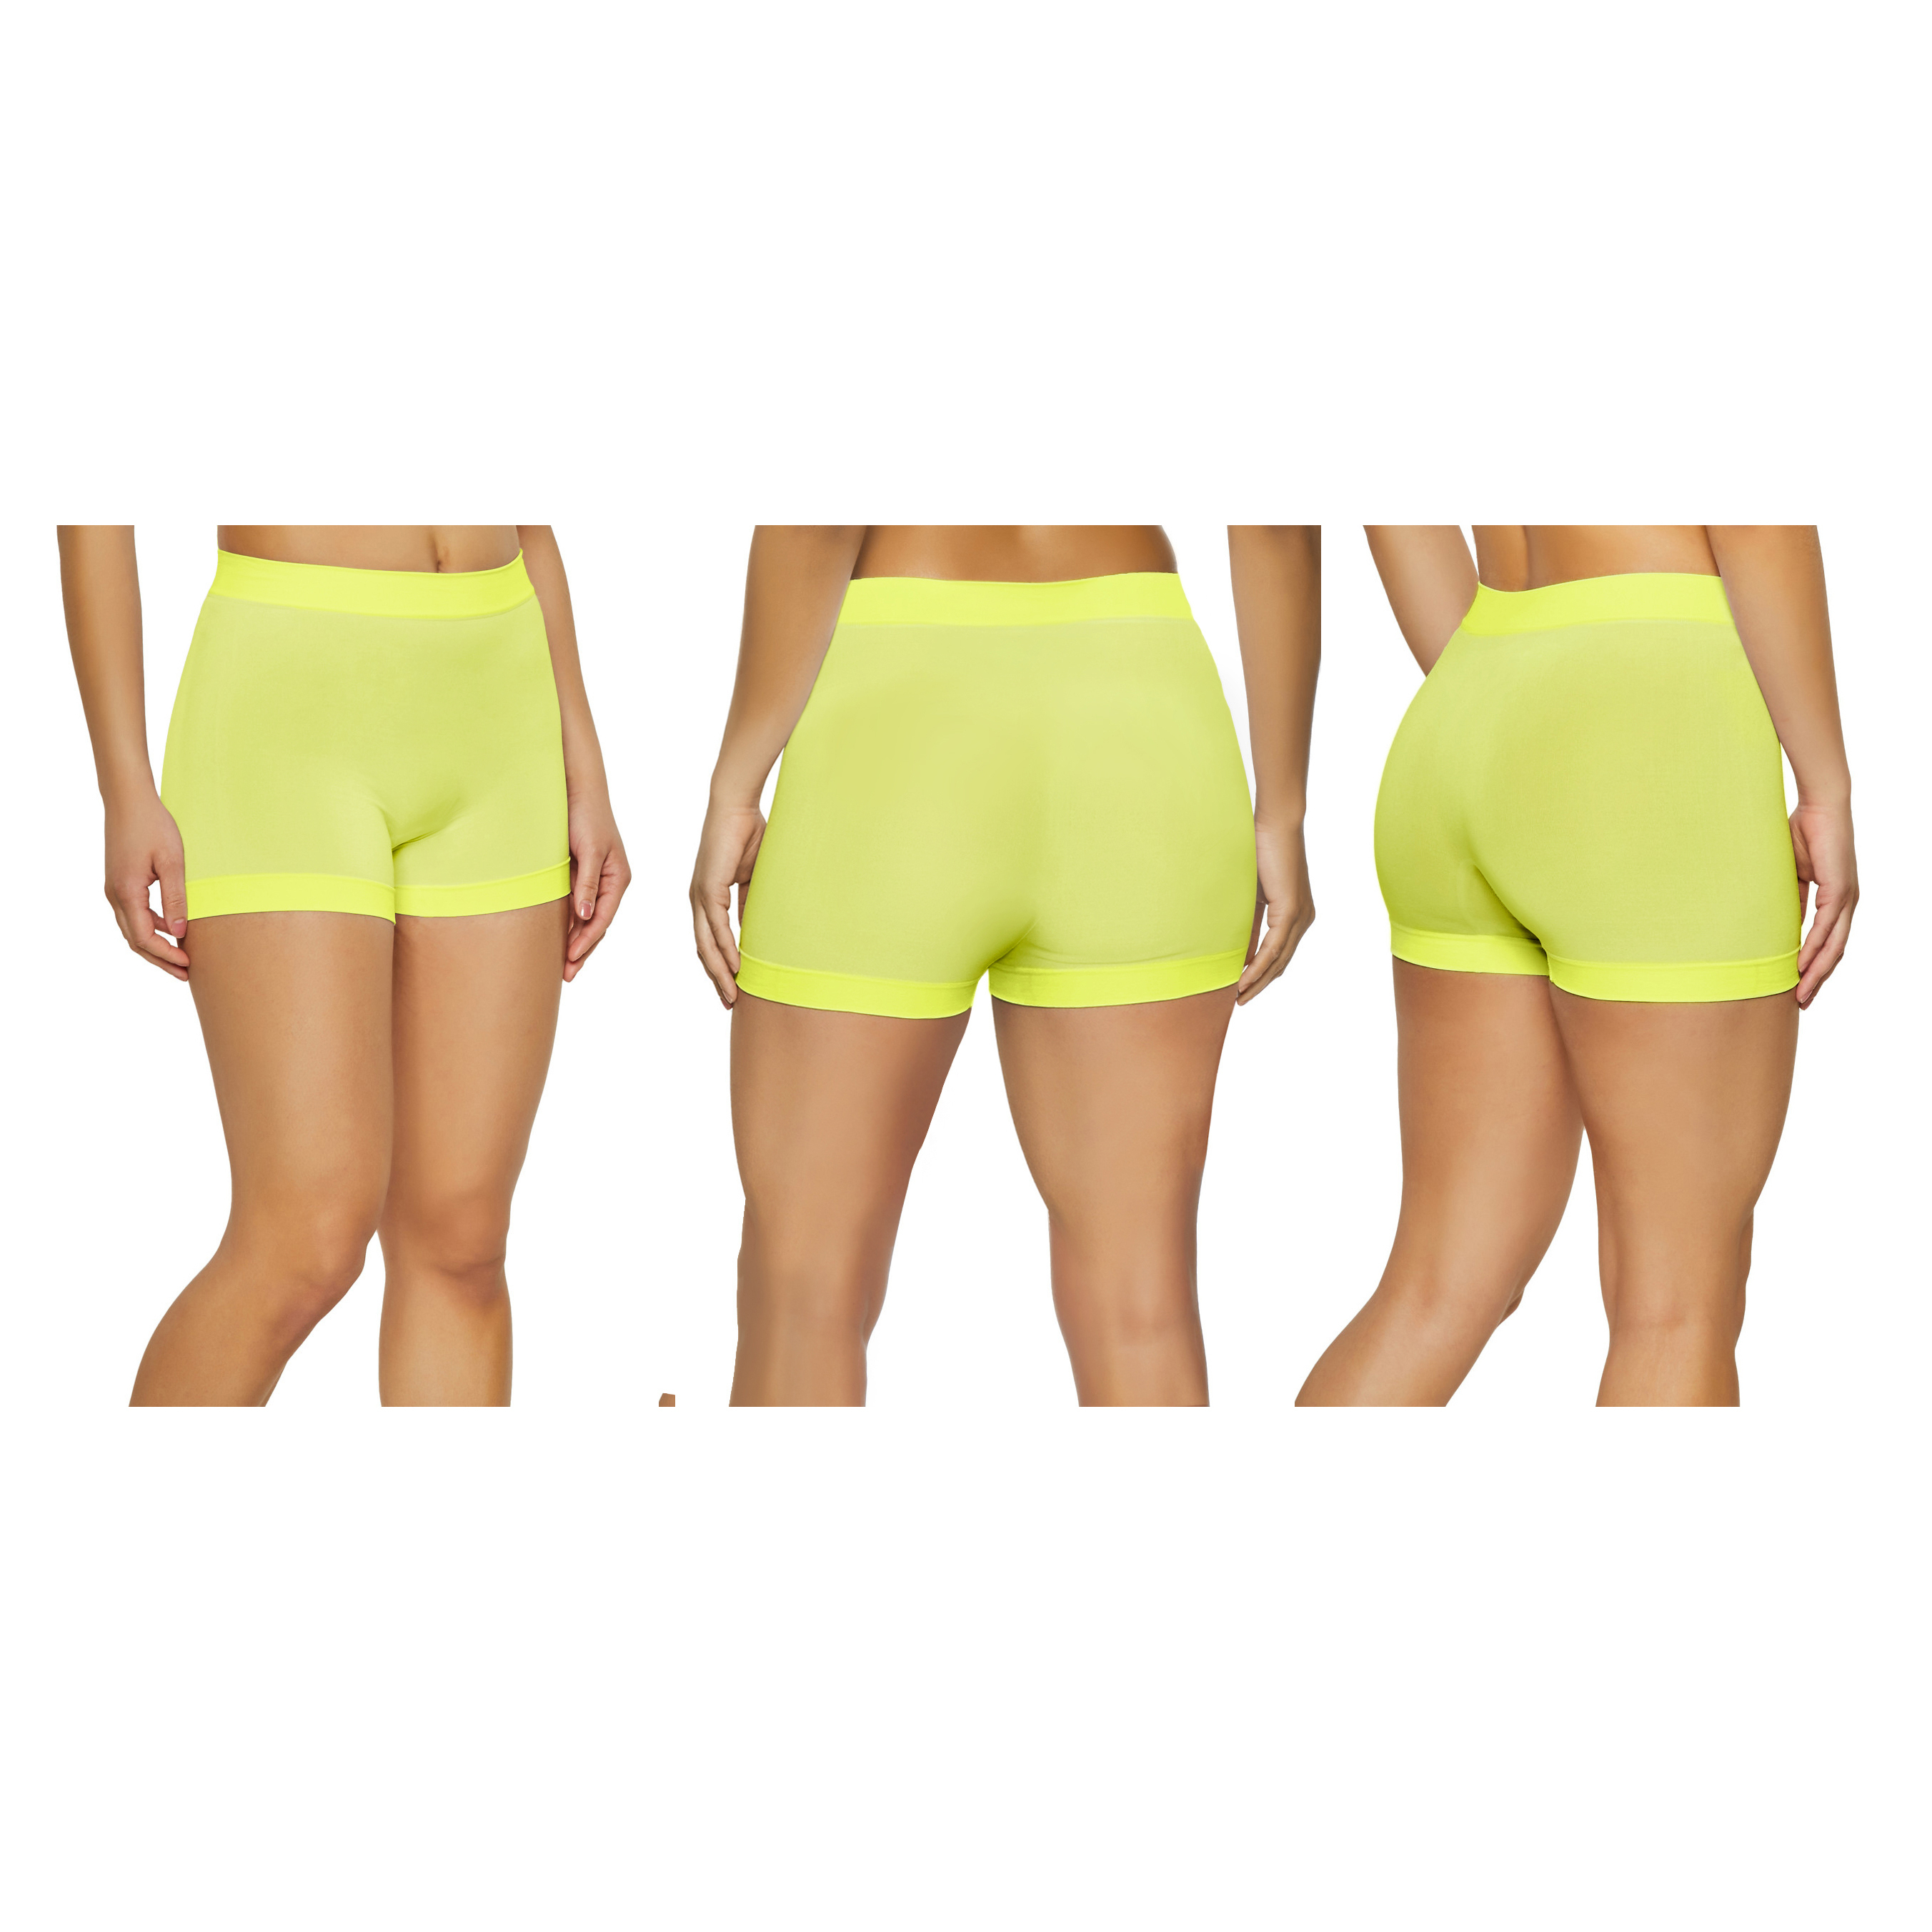 12-Pack Women's High Waisted Biker Bottom Shorts For Yoga Gym Running Ladies Pants - YELLOW, L